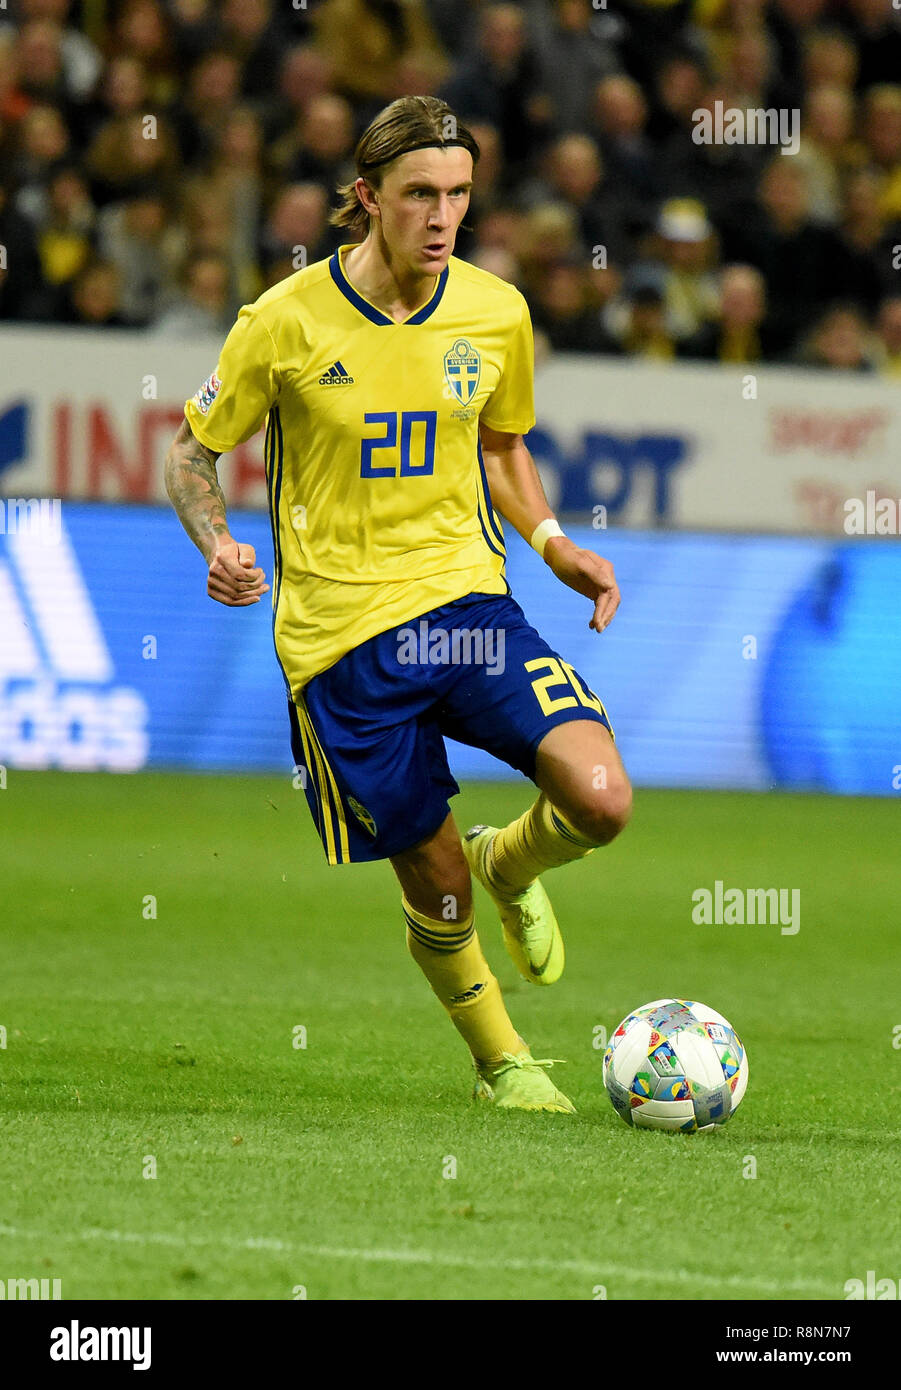 Solna, Sweden - November 20, 2018. Sweden national team midfielder Kristoffer Olsson during UEFA Nations League match Sweden vs Russia in Solna. Stock Photo